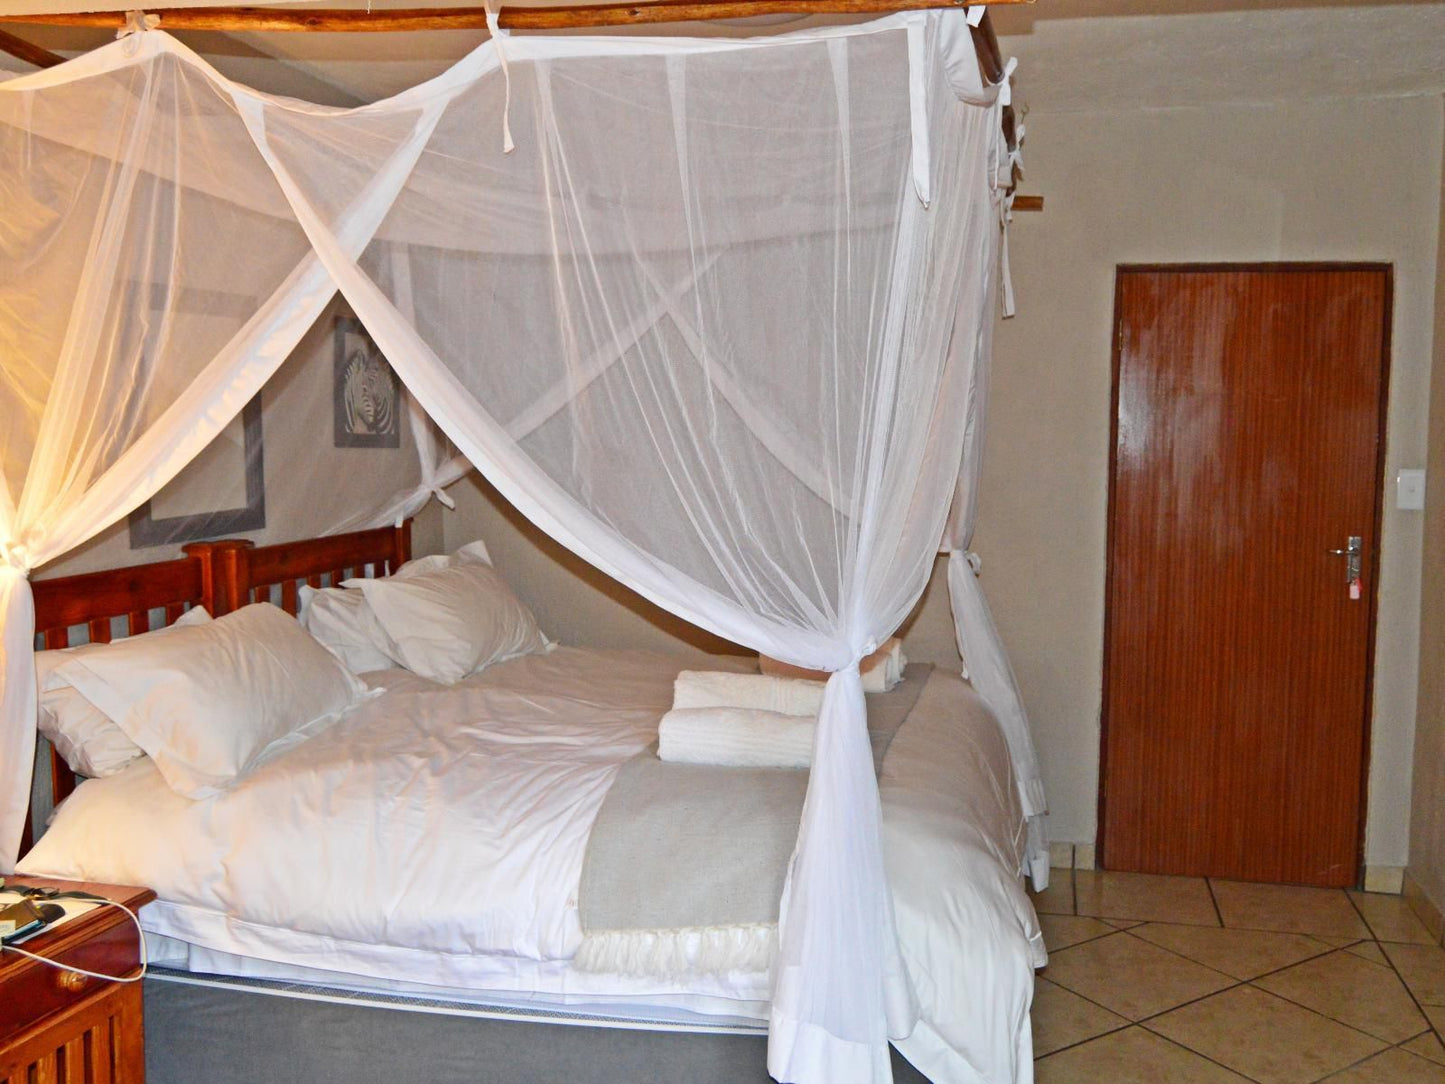 Pan African Safari Marloth Park Mpumalanga South Africa Tent, Architecture, Bedroom